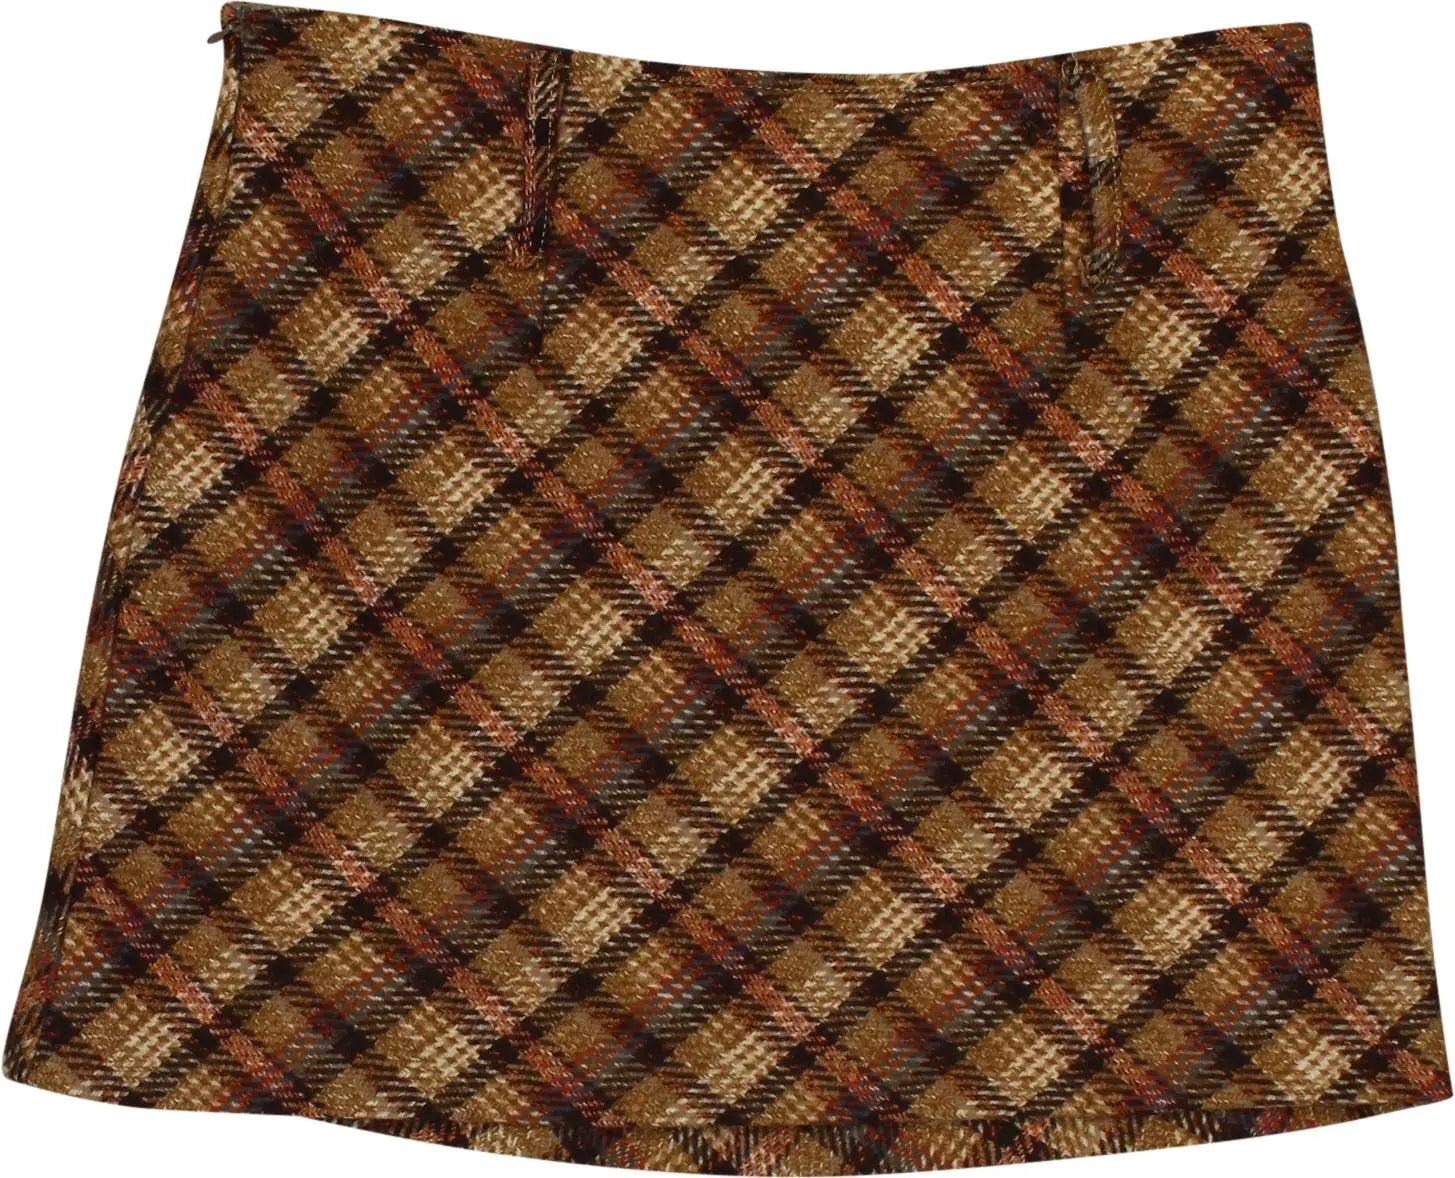 Mötivi - 00s Wool Tartan Skirt- ThriftTale.com - Vintage and second handclothing